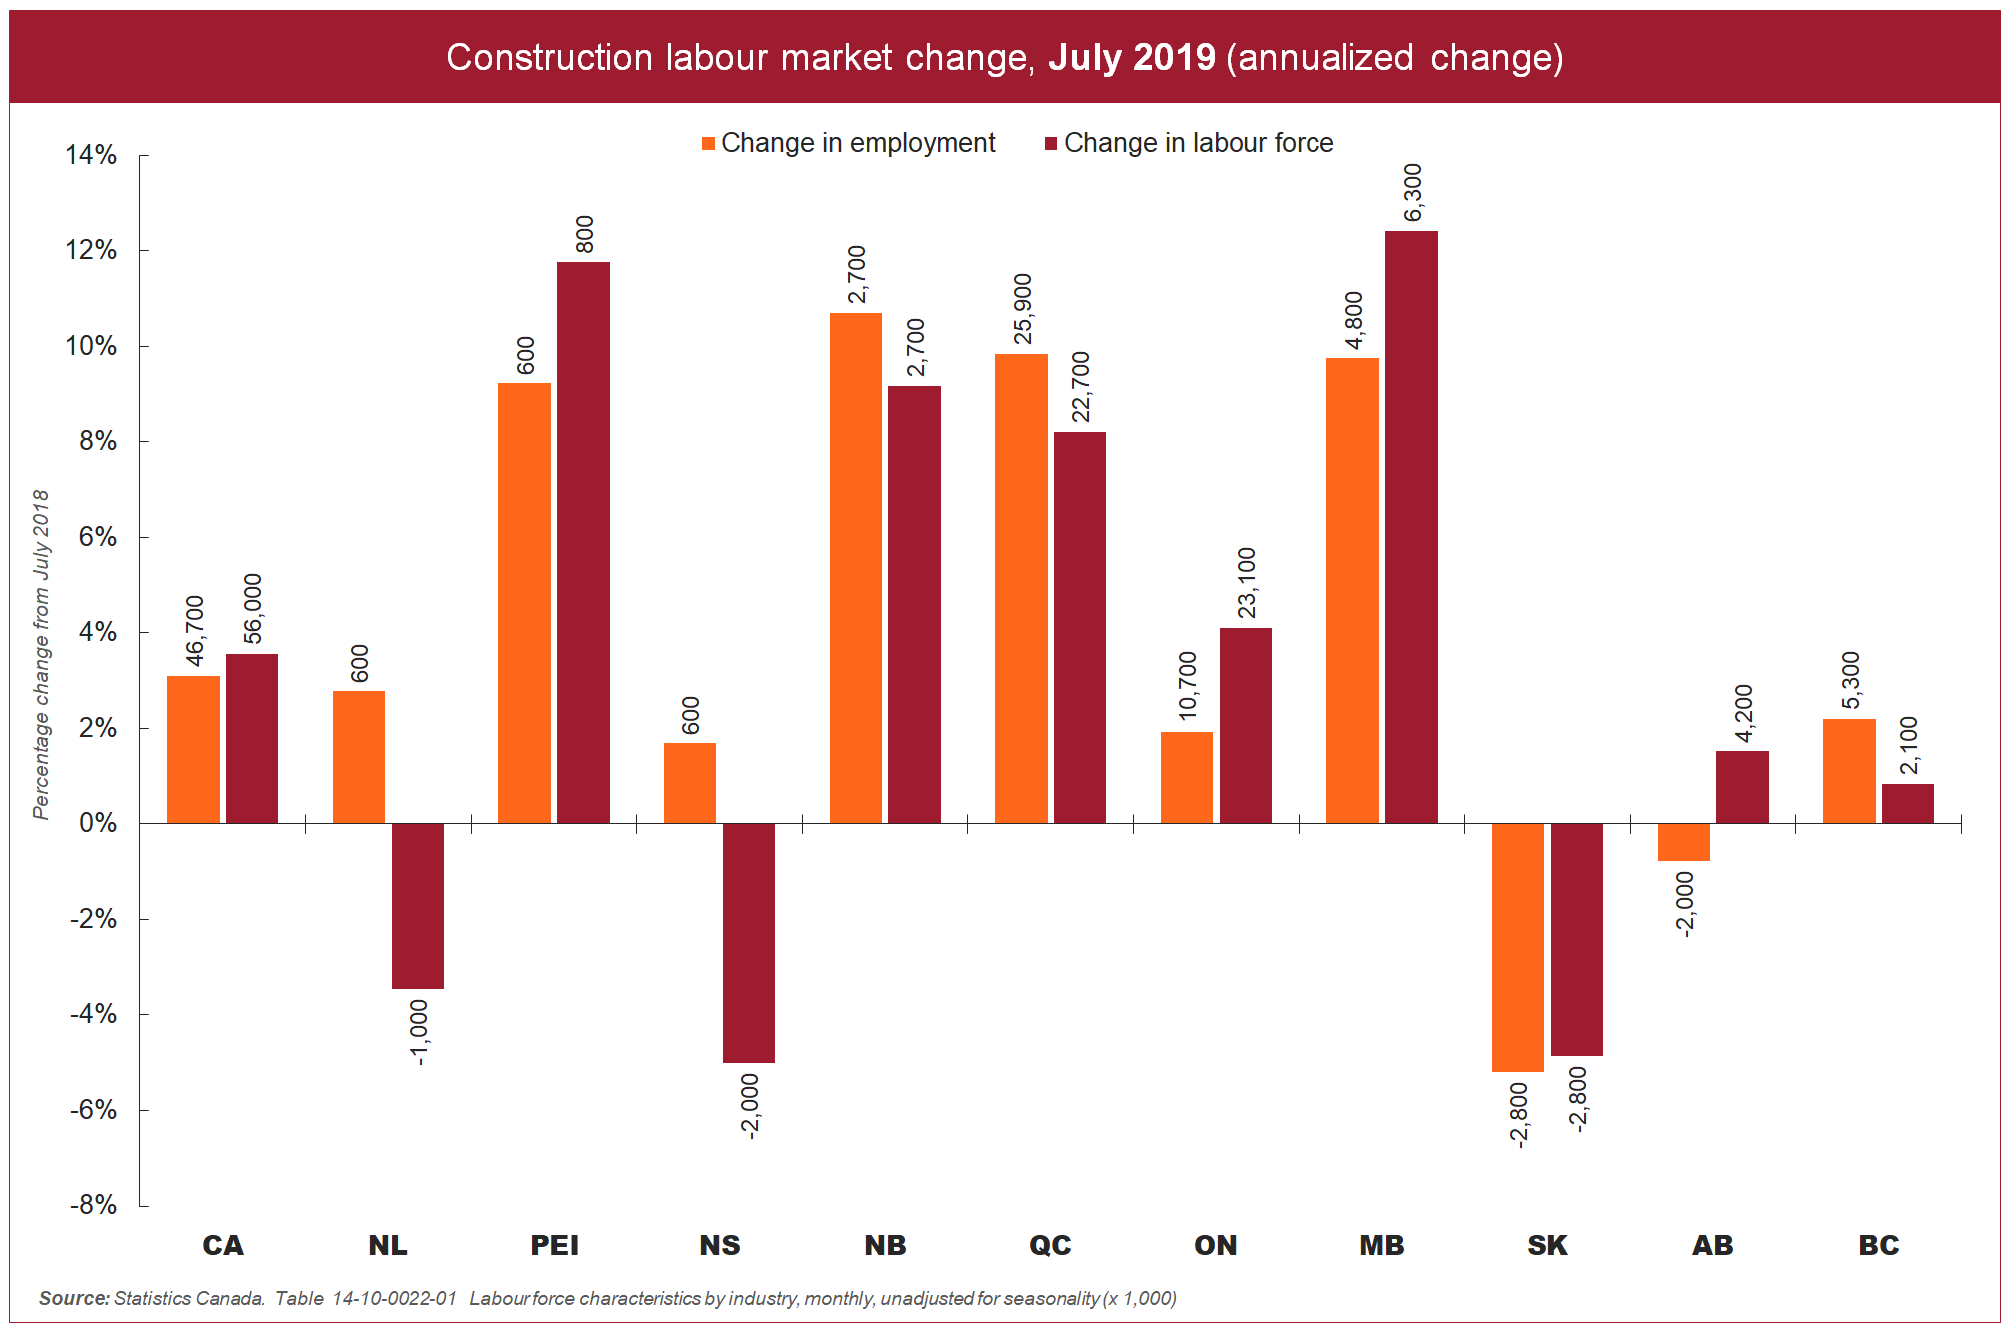 [graph] Construction labour market change, July 2019 (annualized change)